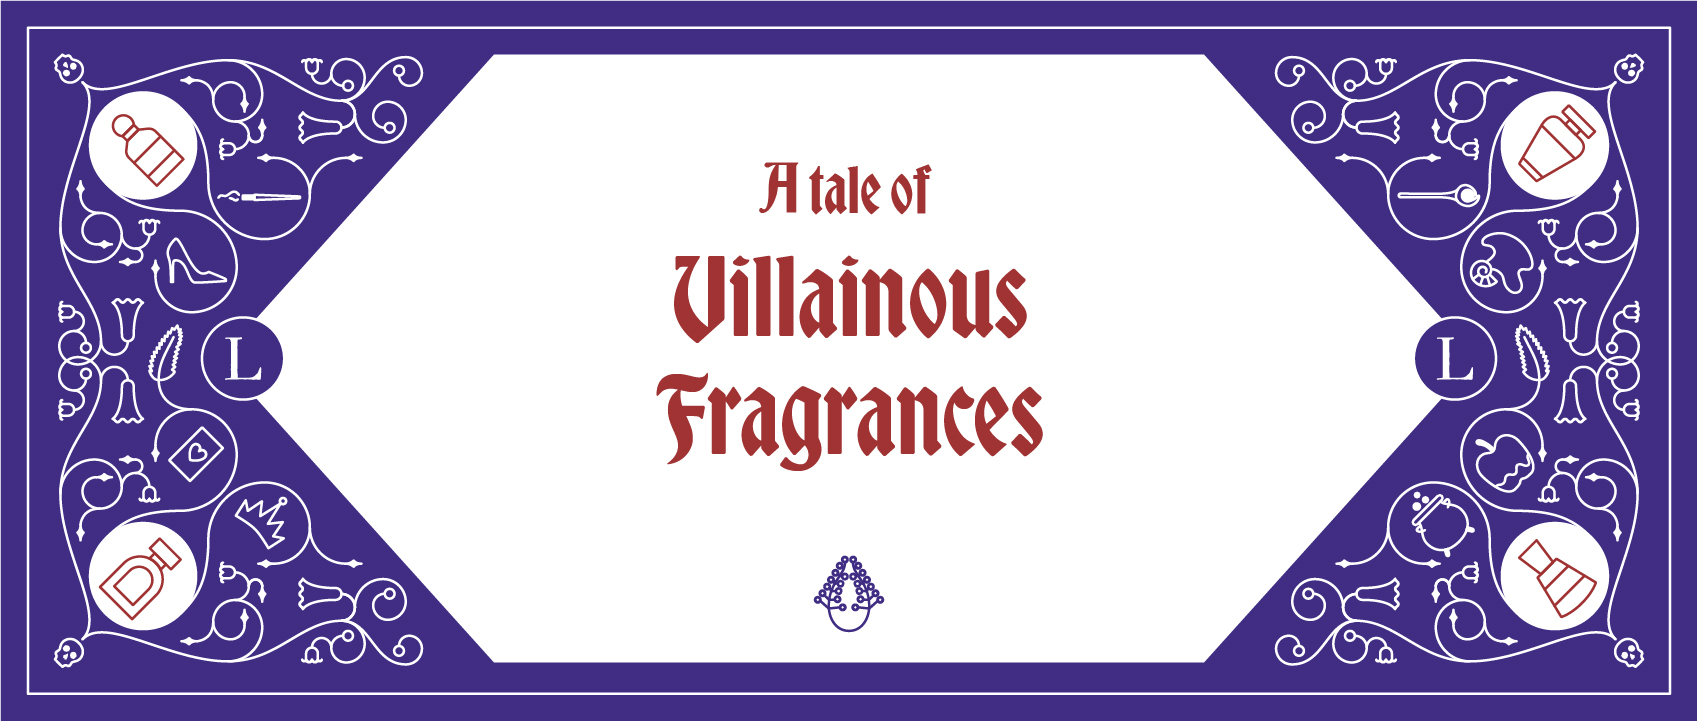 illustration of a fairy tale book cover a tale of villainous fragrances